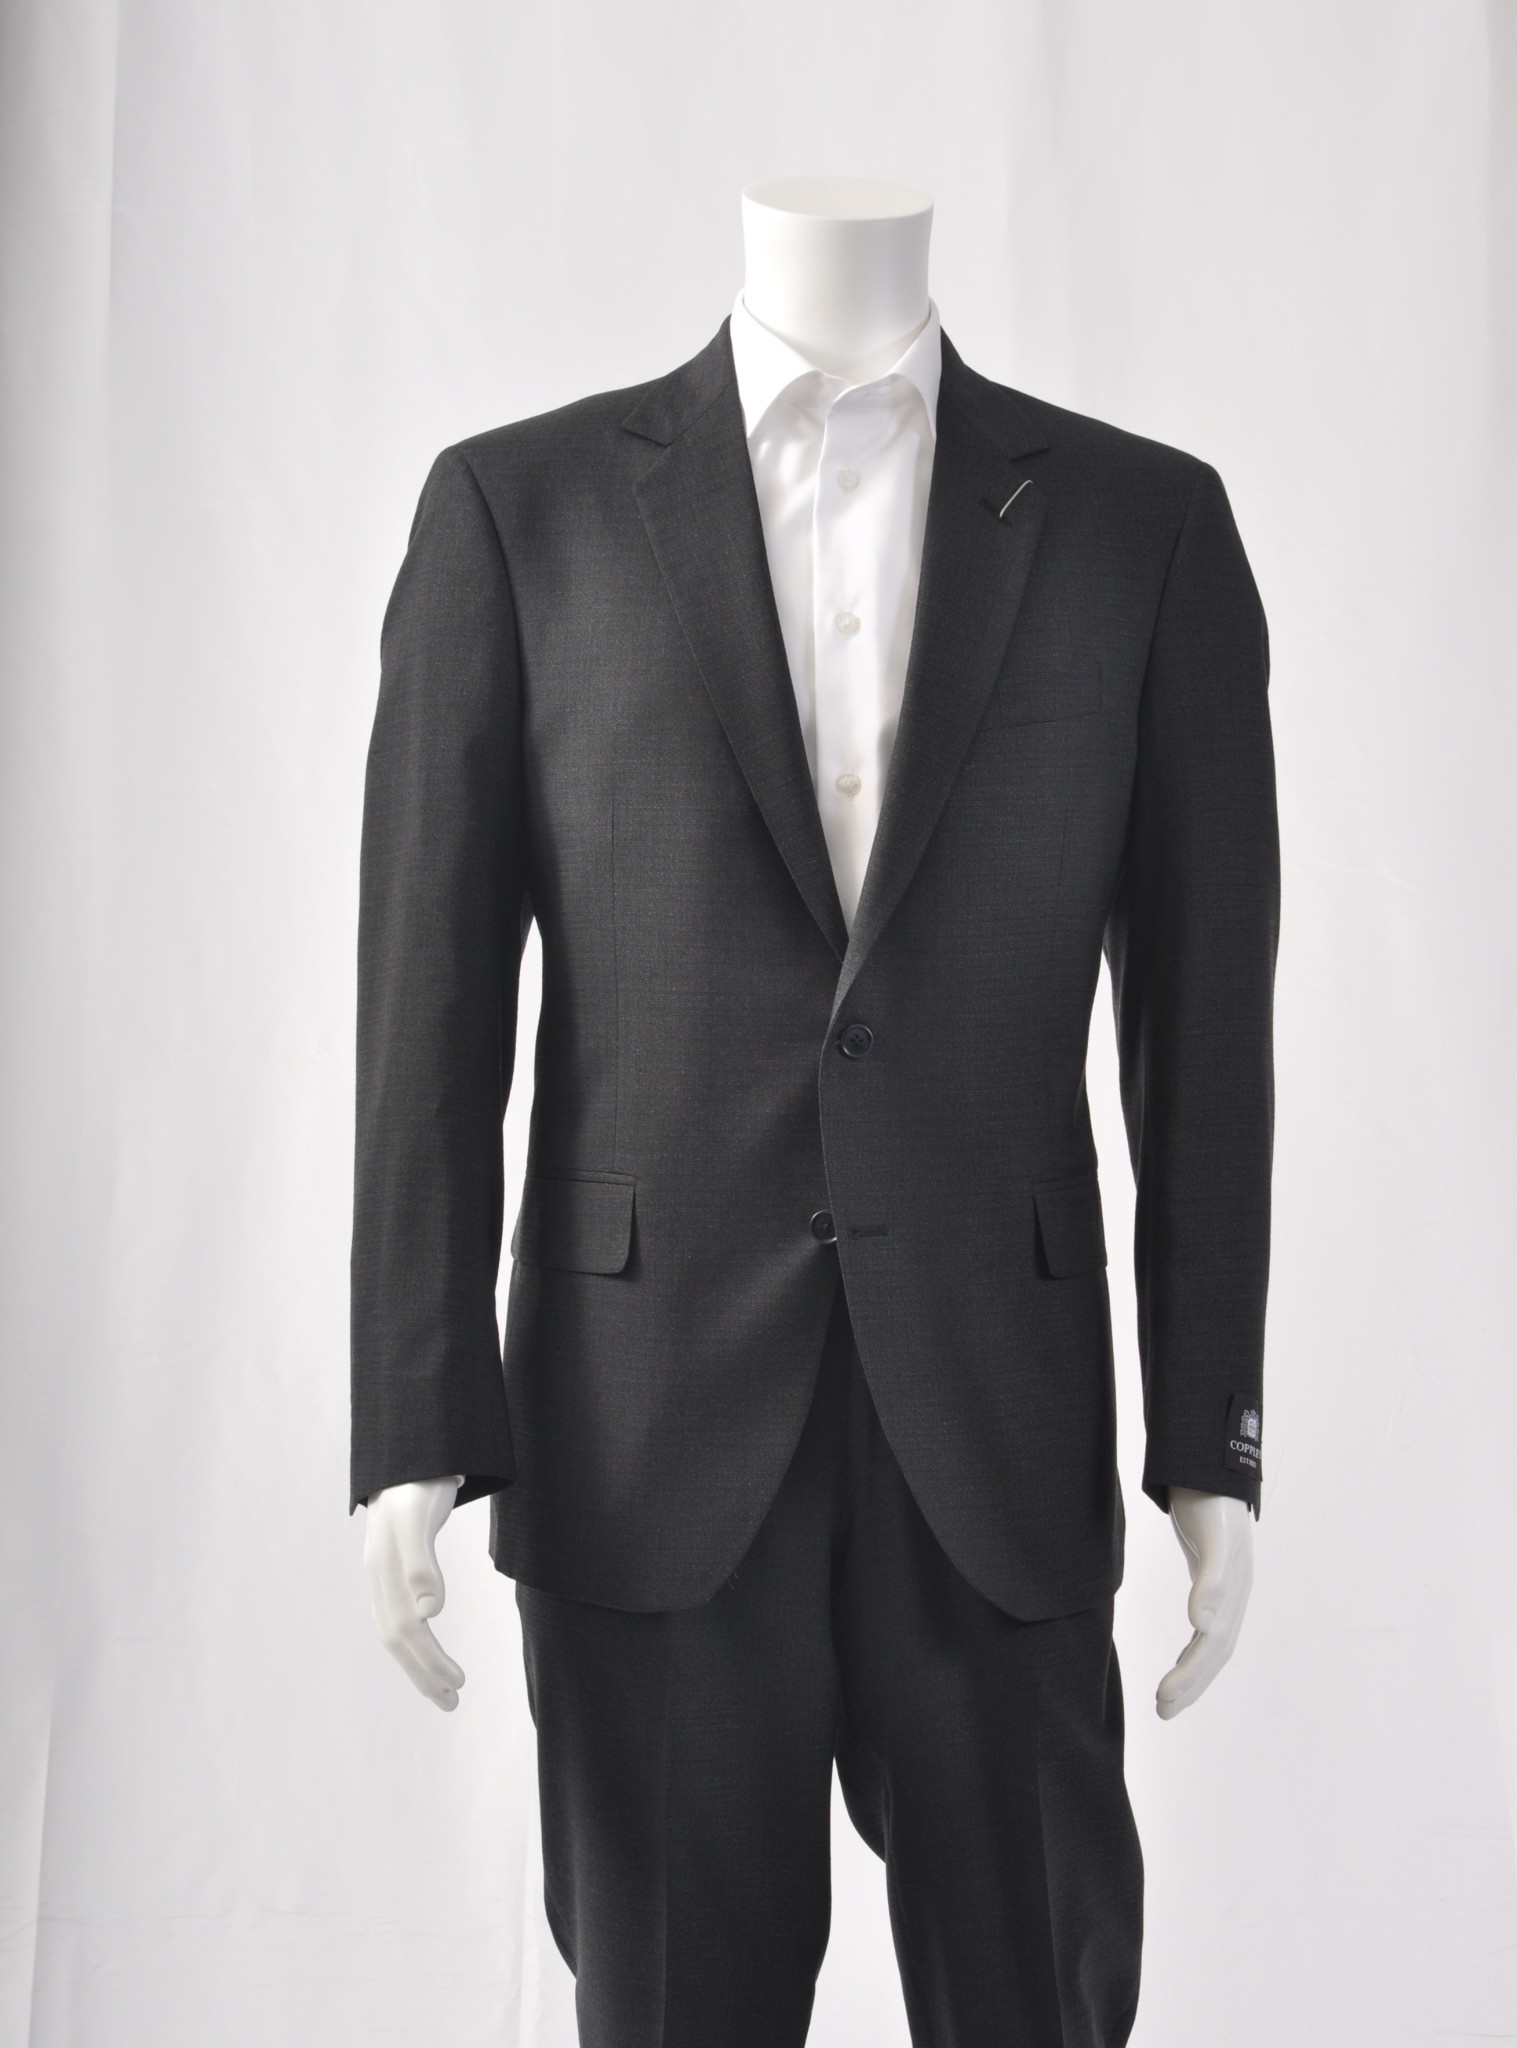 Classic Fit Charcoal Navy Block Suit - Benjamin's Menswear